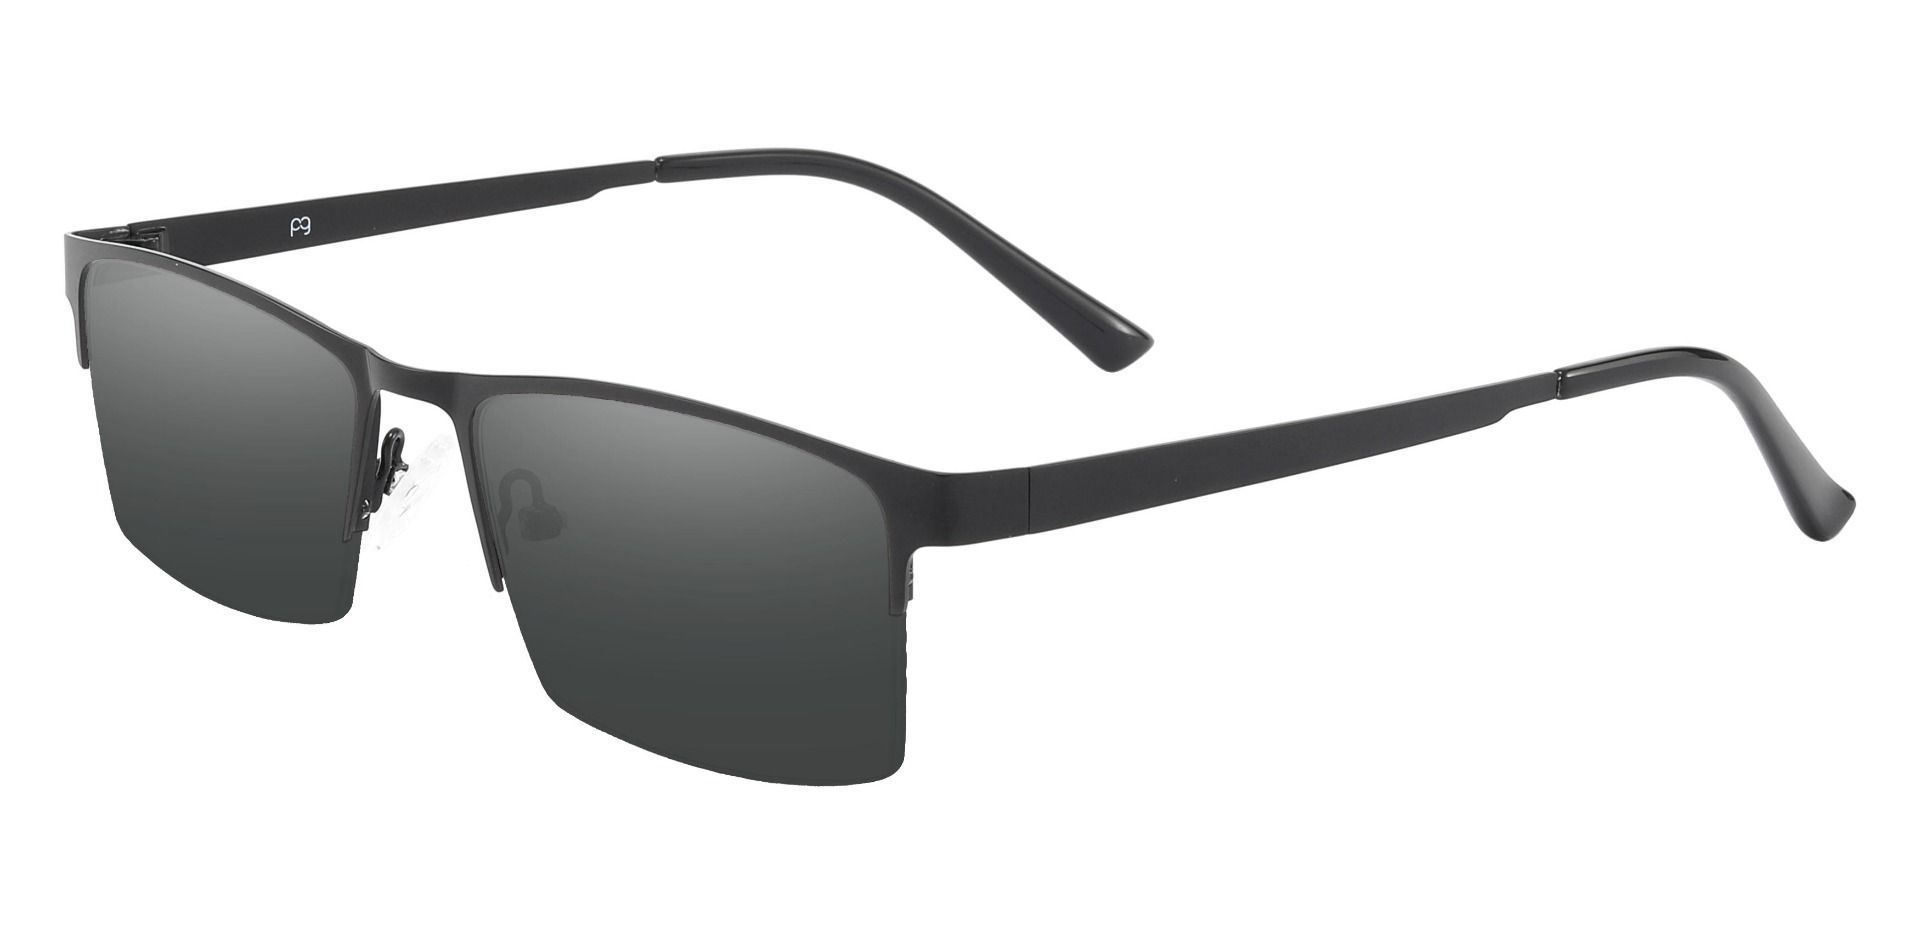 Patrick Rectangle Reading Sunglasses - Black Frame With Gray Lenses